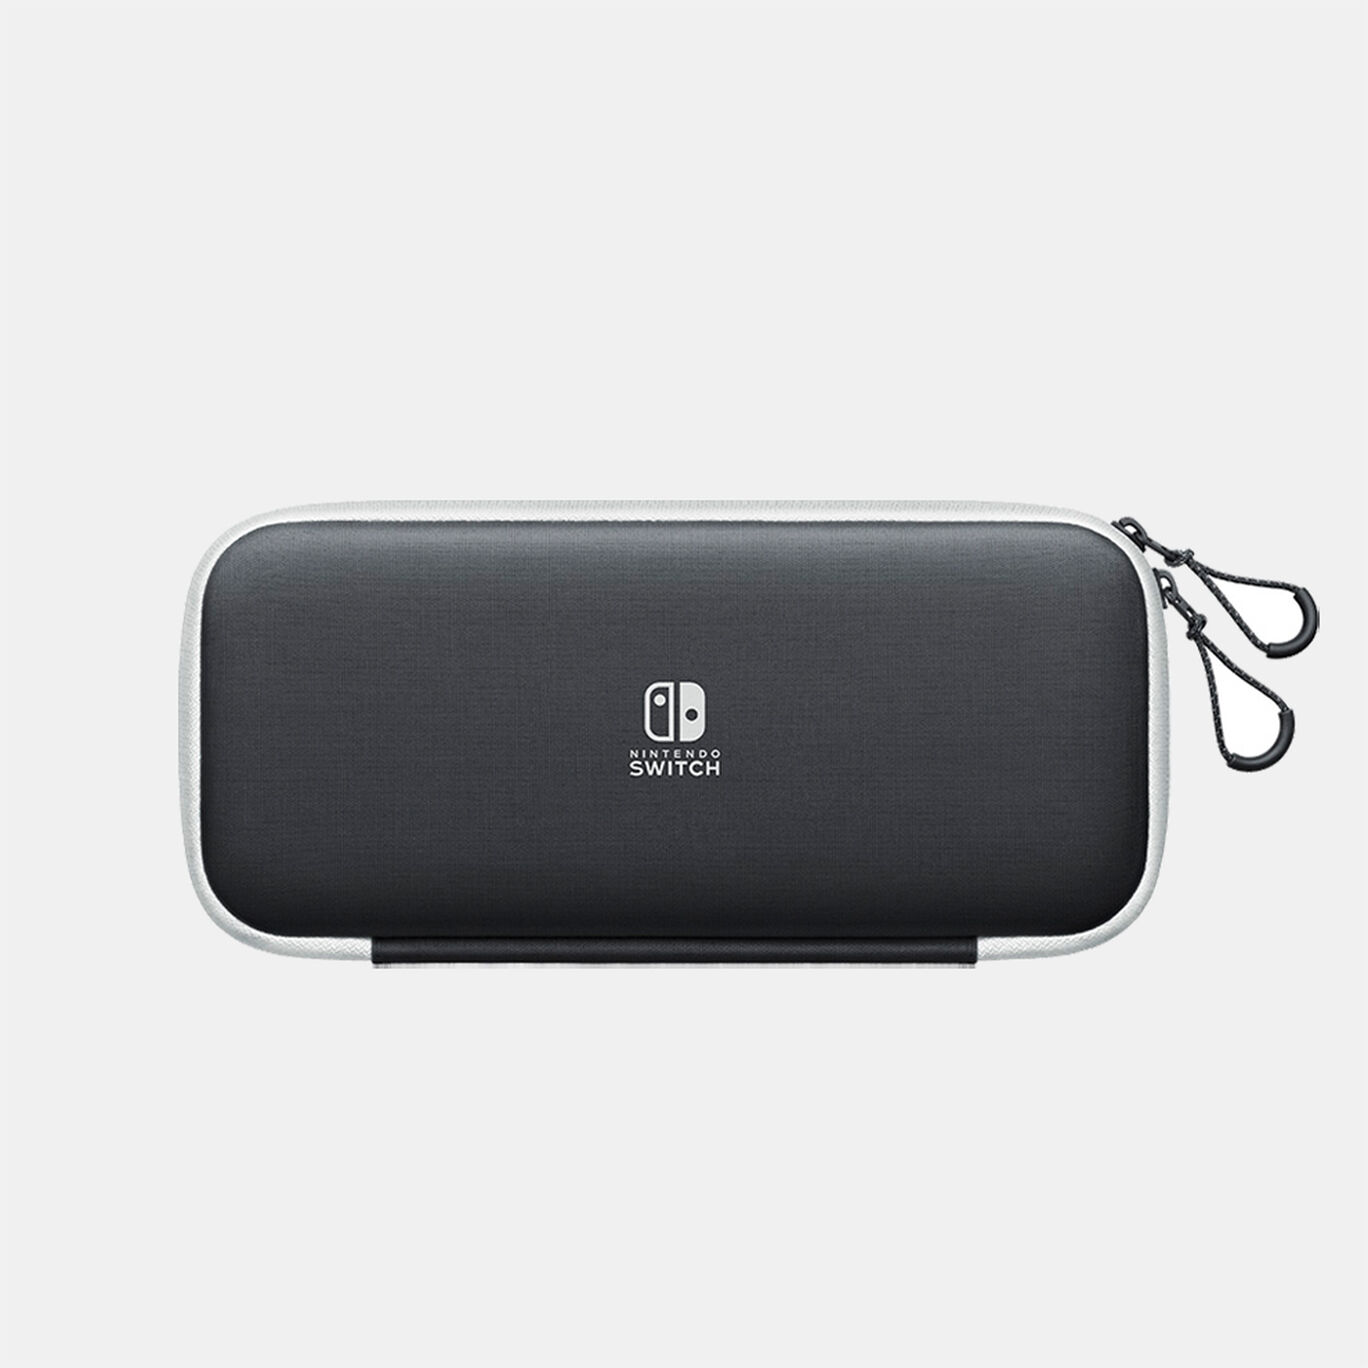 Nintendo Switchキャリングケース 画面保護シート付き My Nintendo Store マイニンテンドーストア